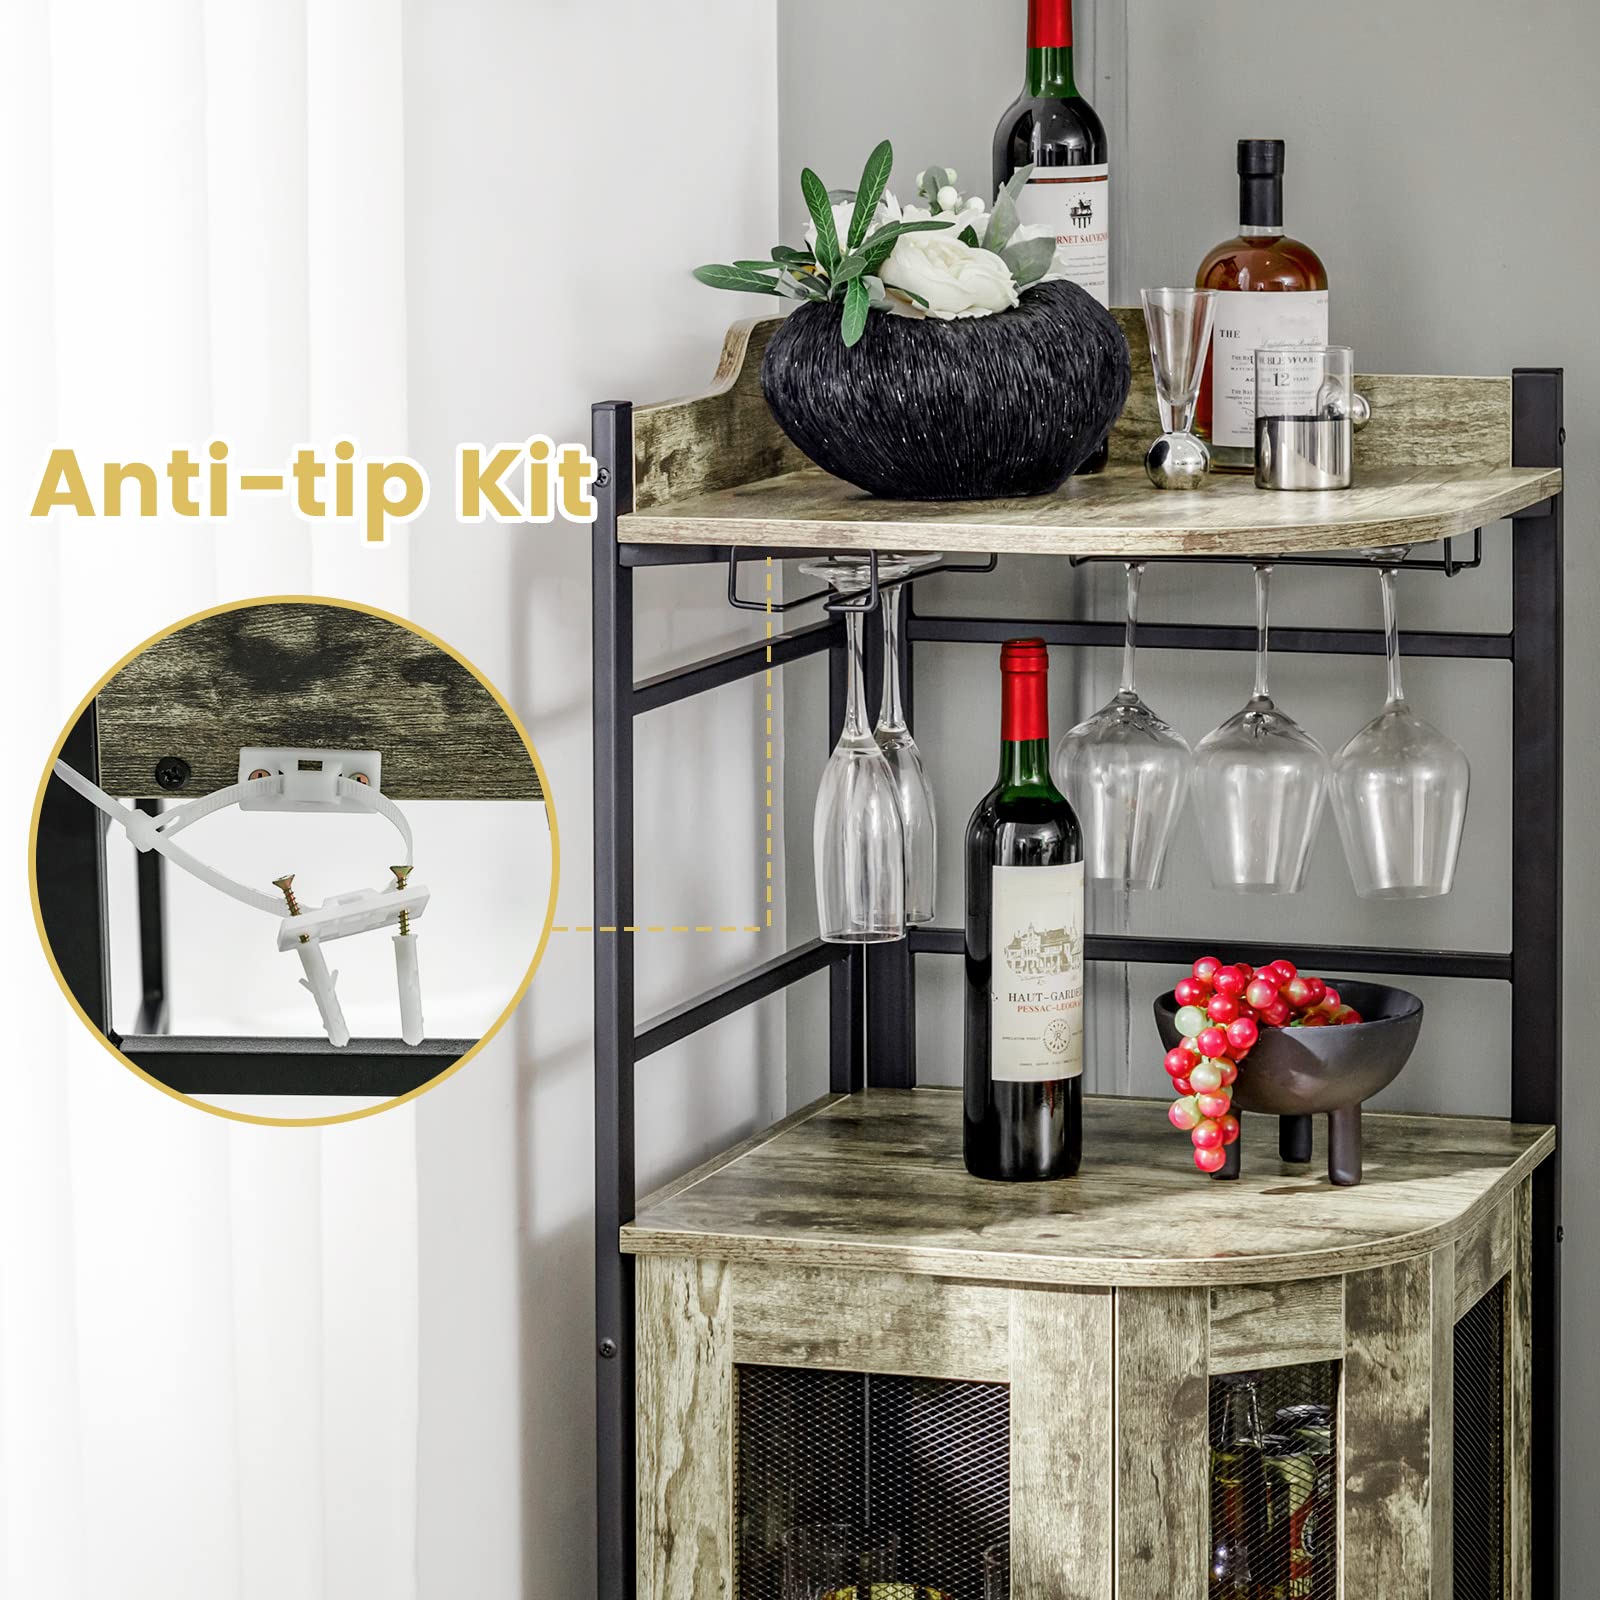 Giantex Corner Bar Cabinet with Glass Holder